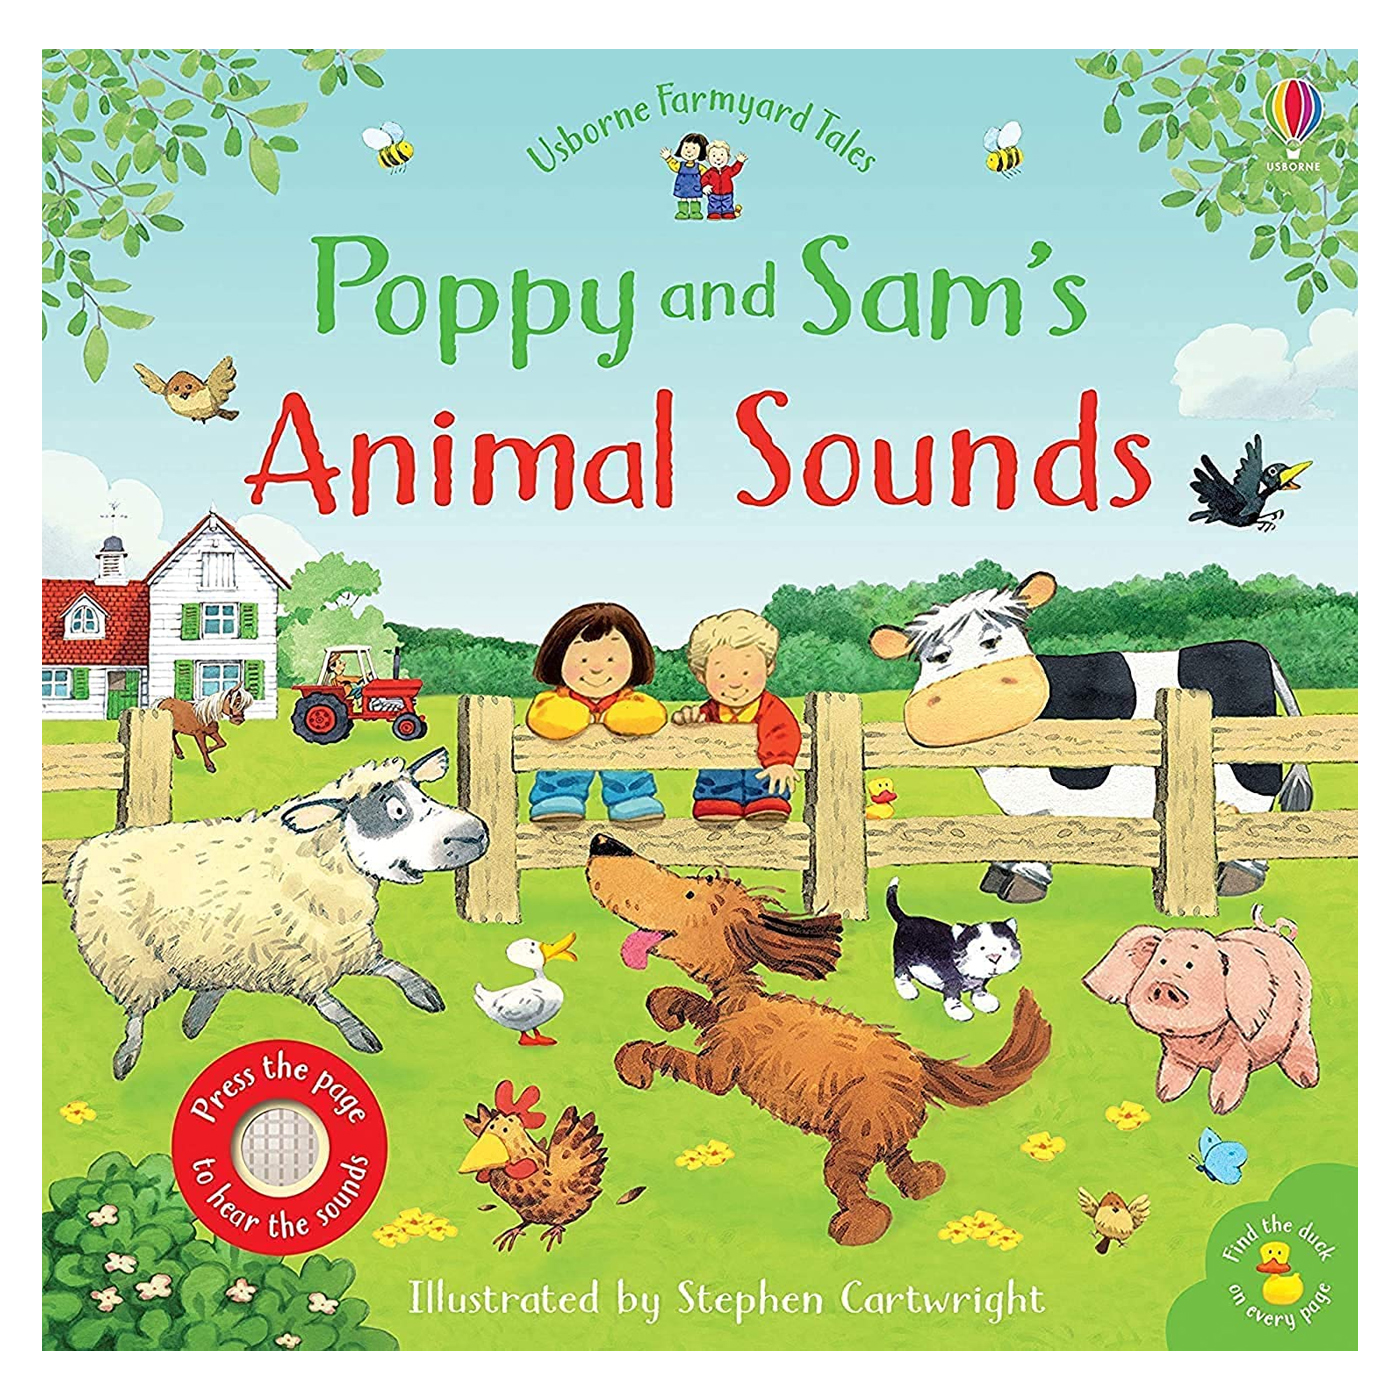  Poppy and Sam's Animal Sounds